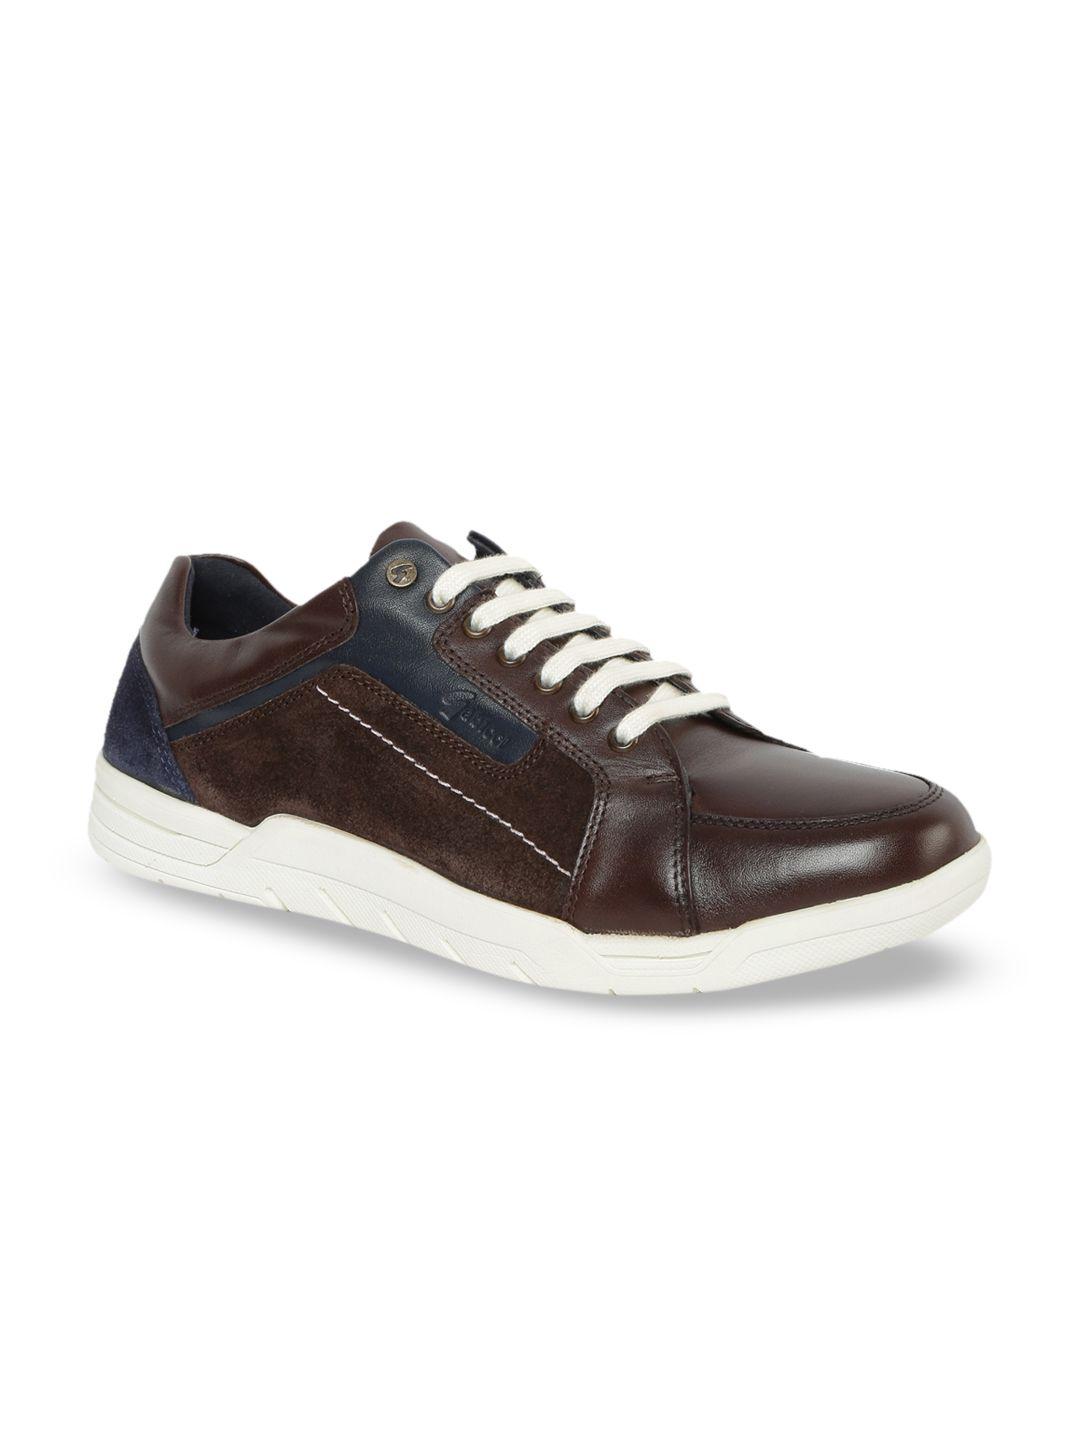 gabicci men brown leather sneakers